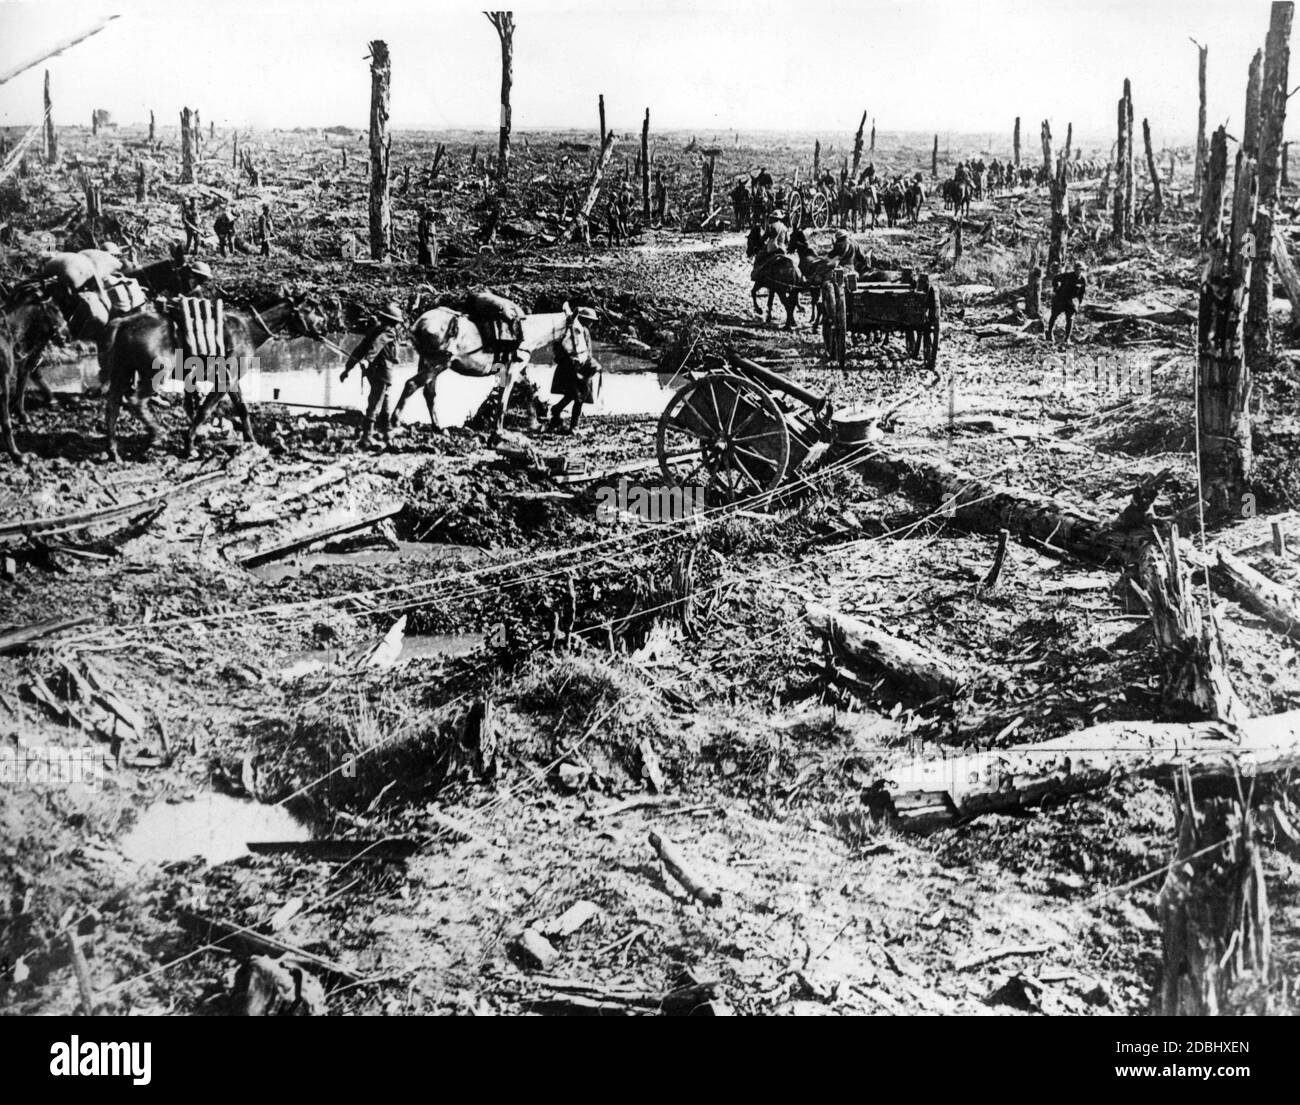 First World War: German soldiers in the battlefield Stock Photo